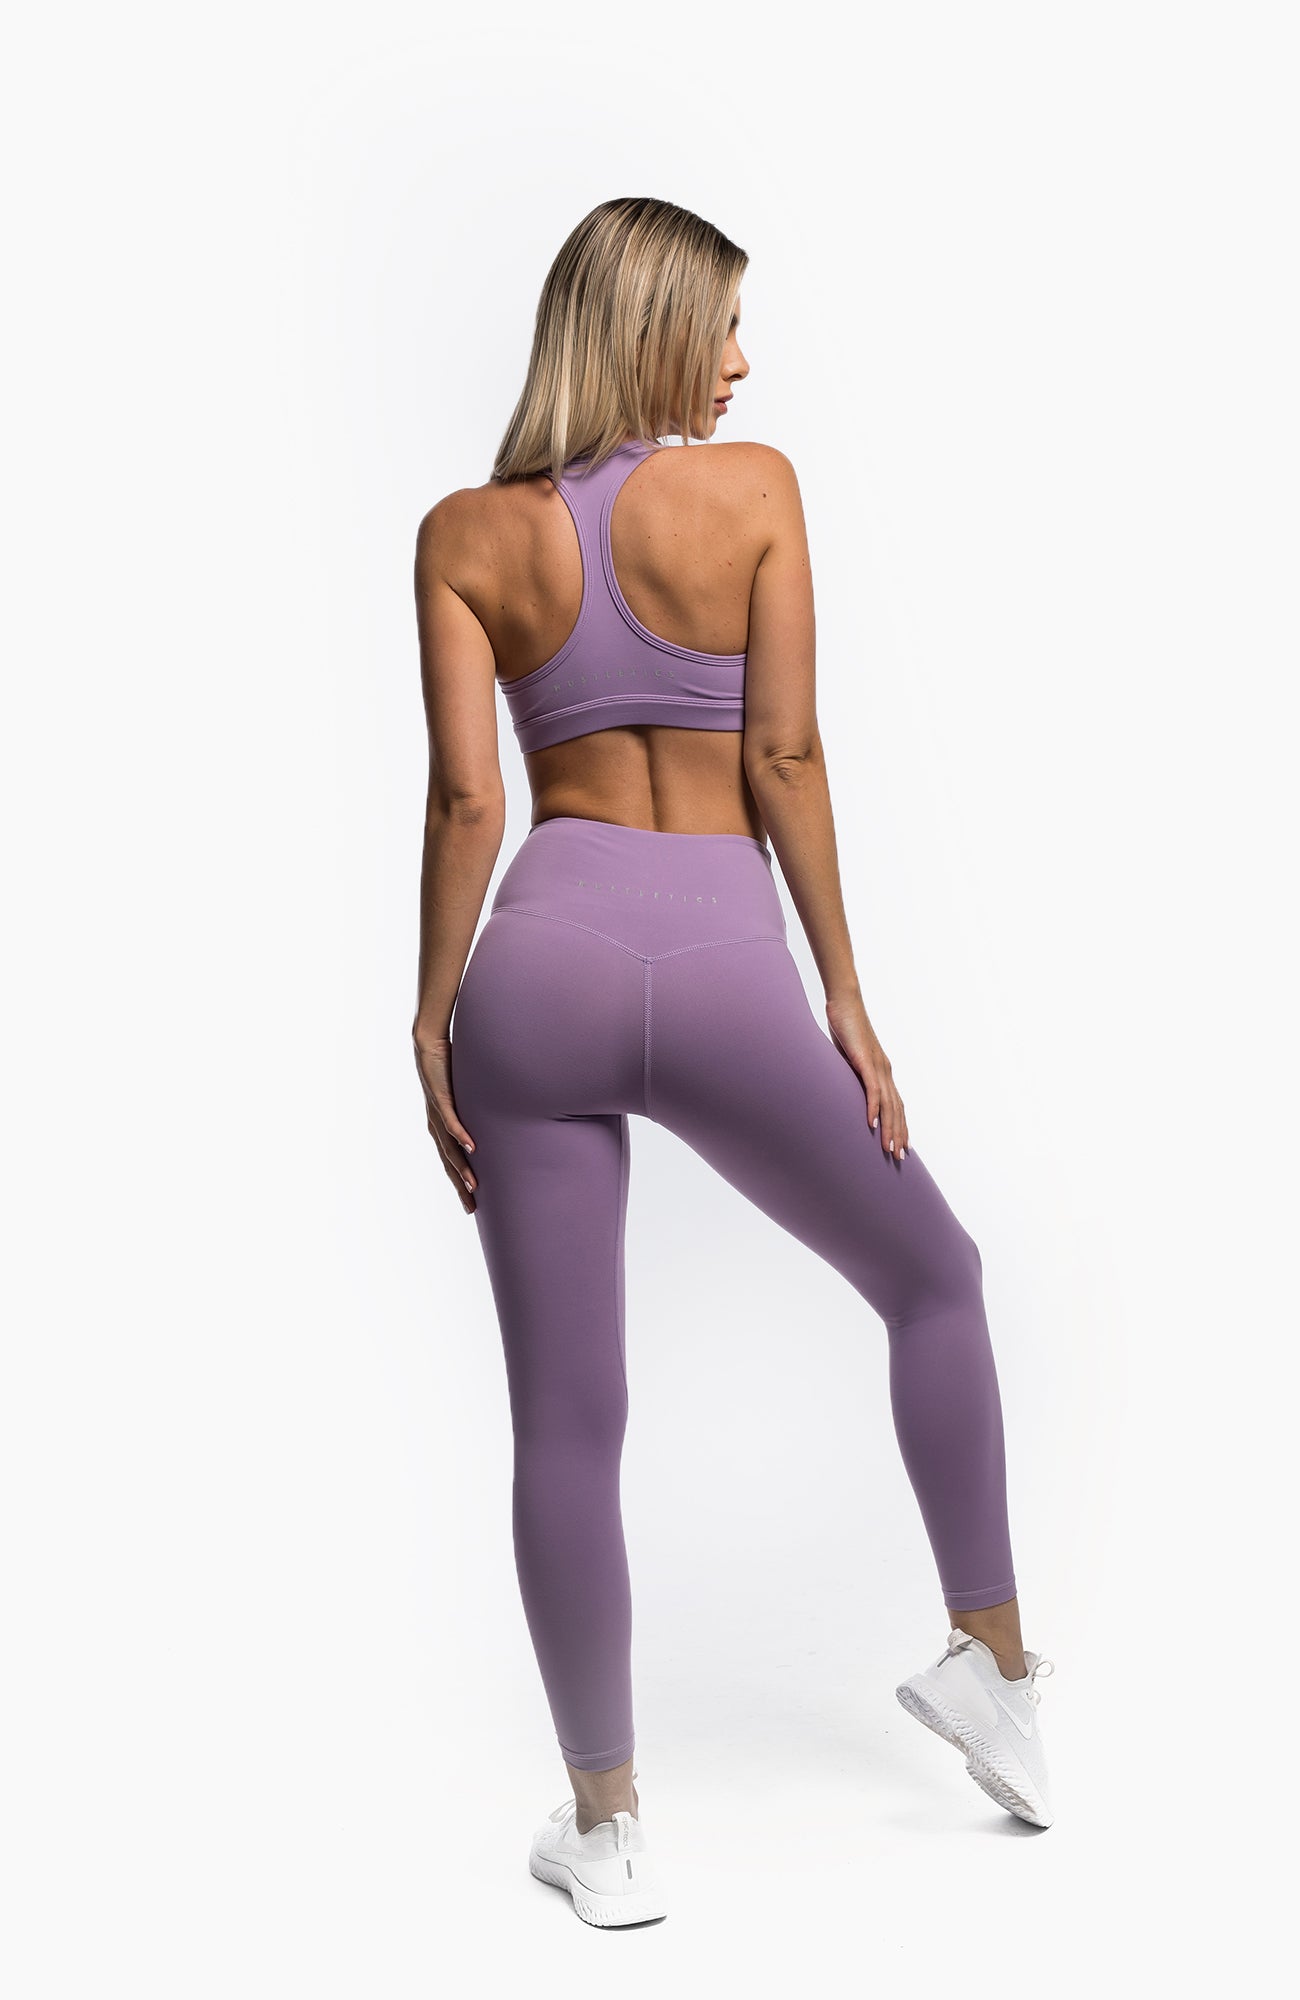 Simple Stripes CAPRI Yoga Leggings (Super Soft) S-XL – The Purple Lily